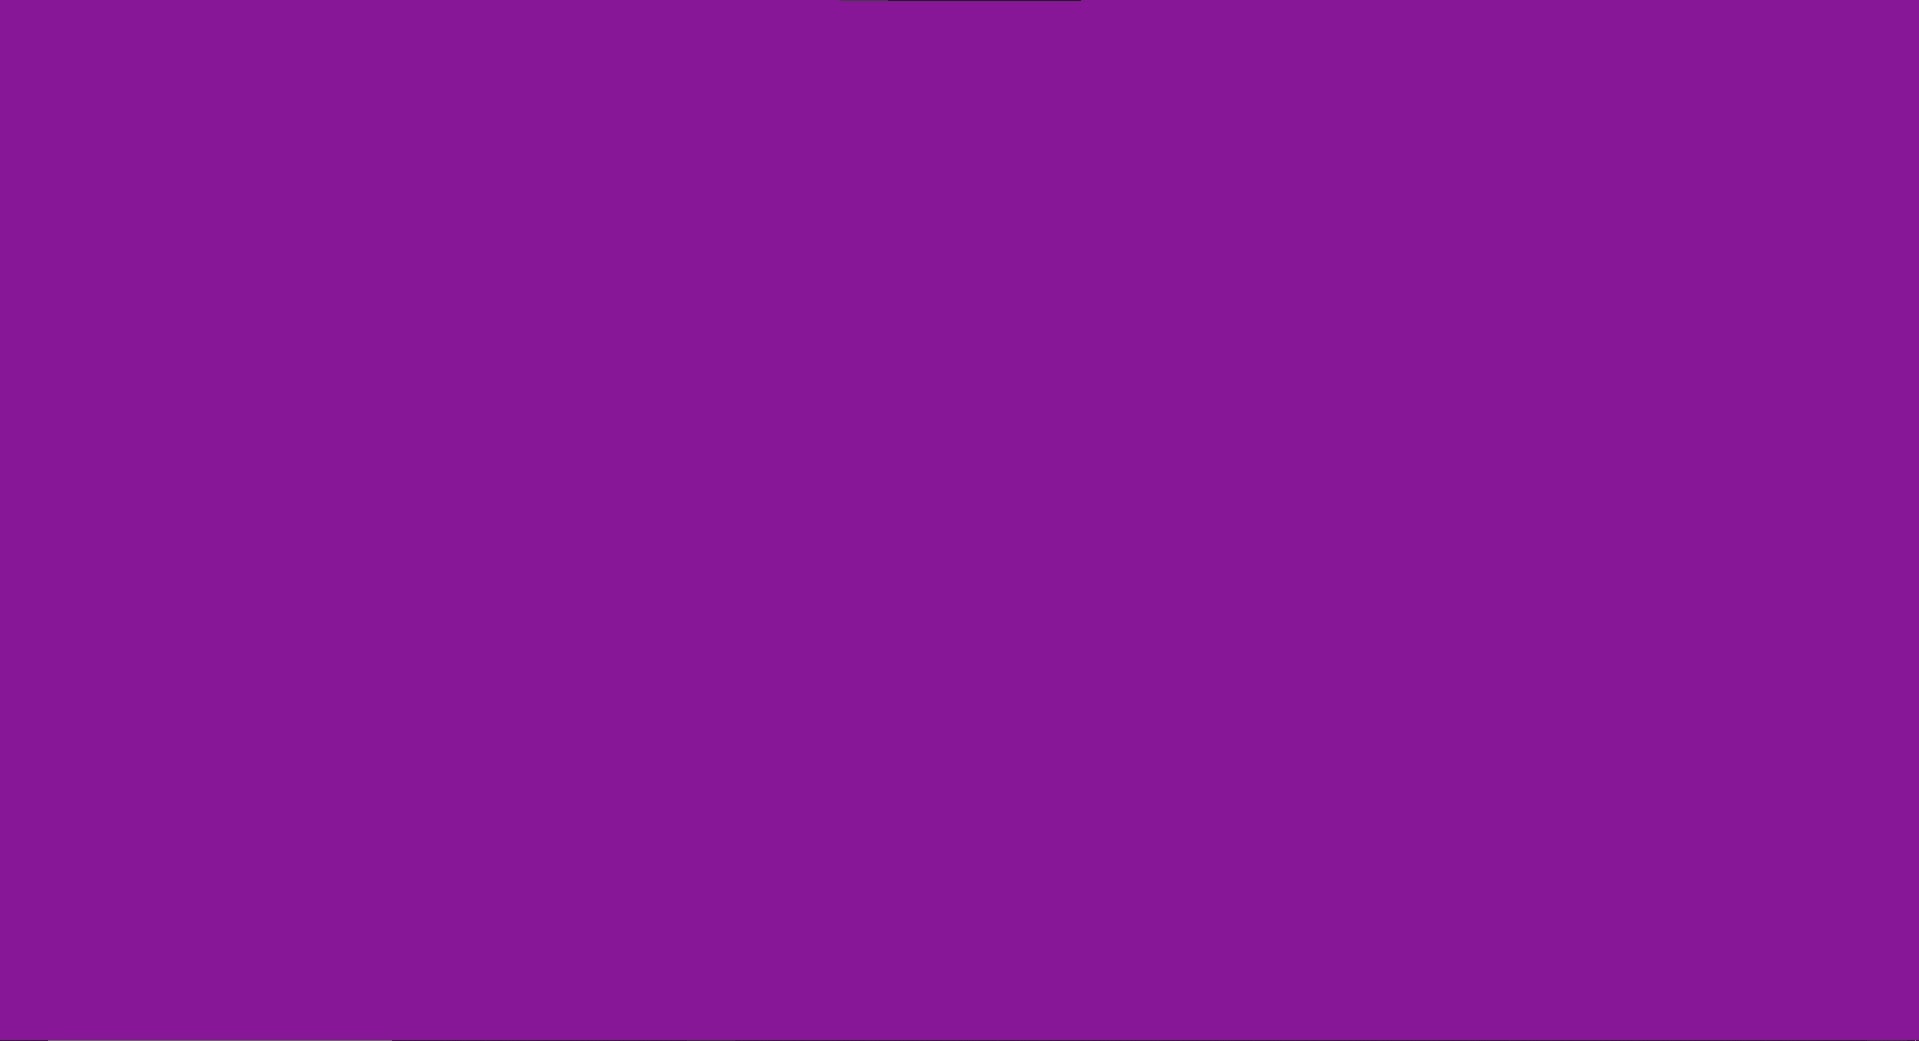 Consistent crashing. Desktop background purple??